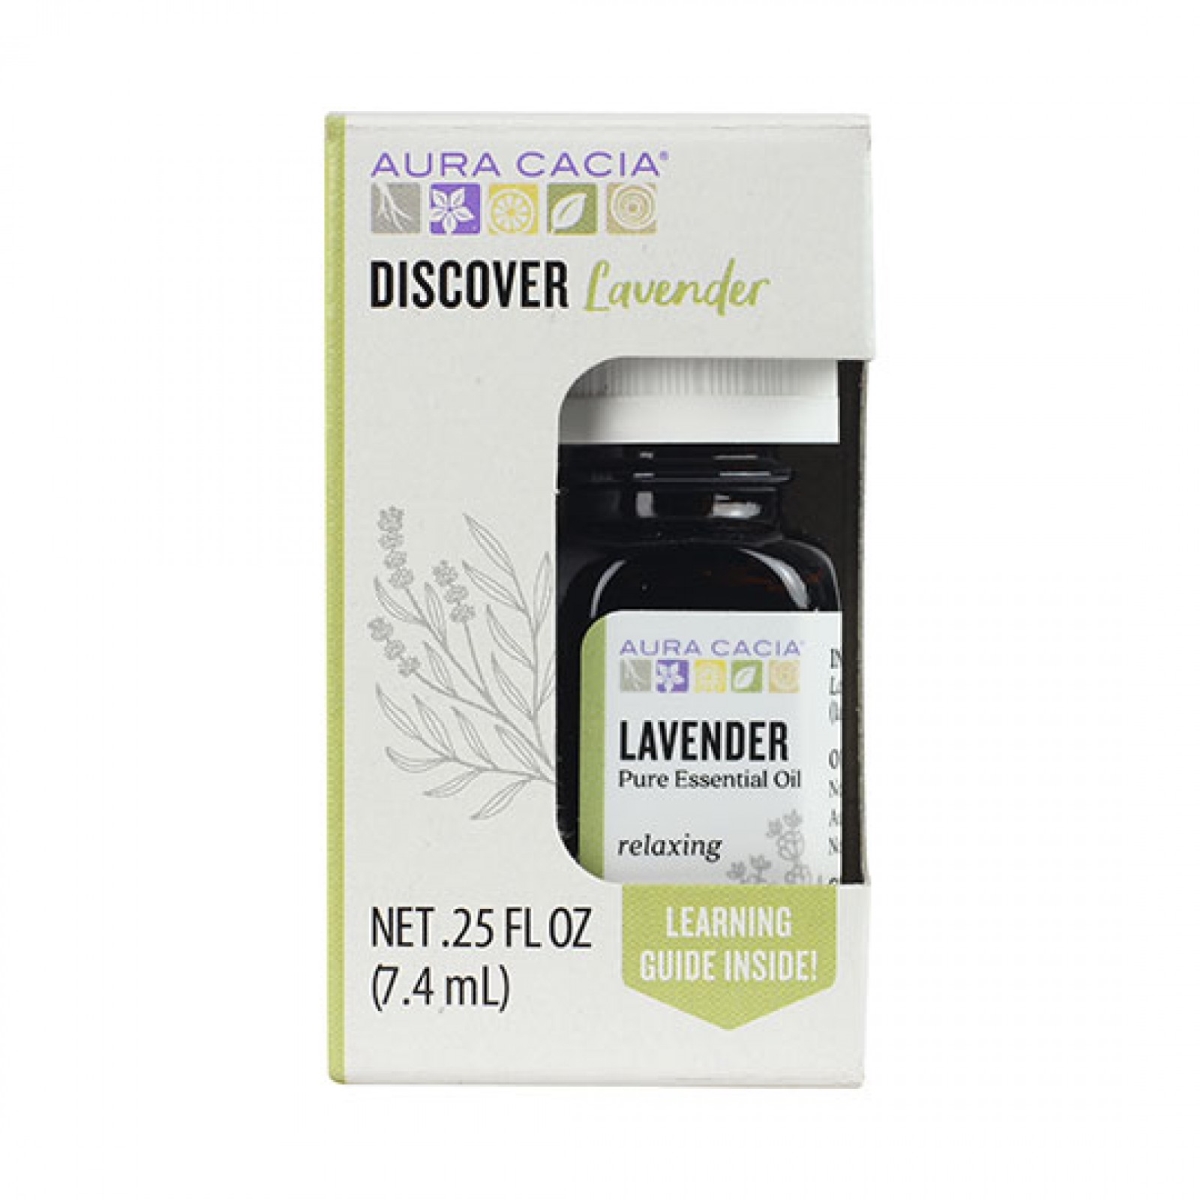 190847 25 Fl. Ozdiscover Lavender Essential Oil